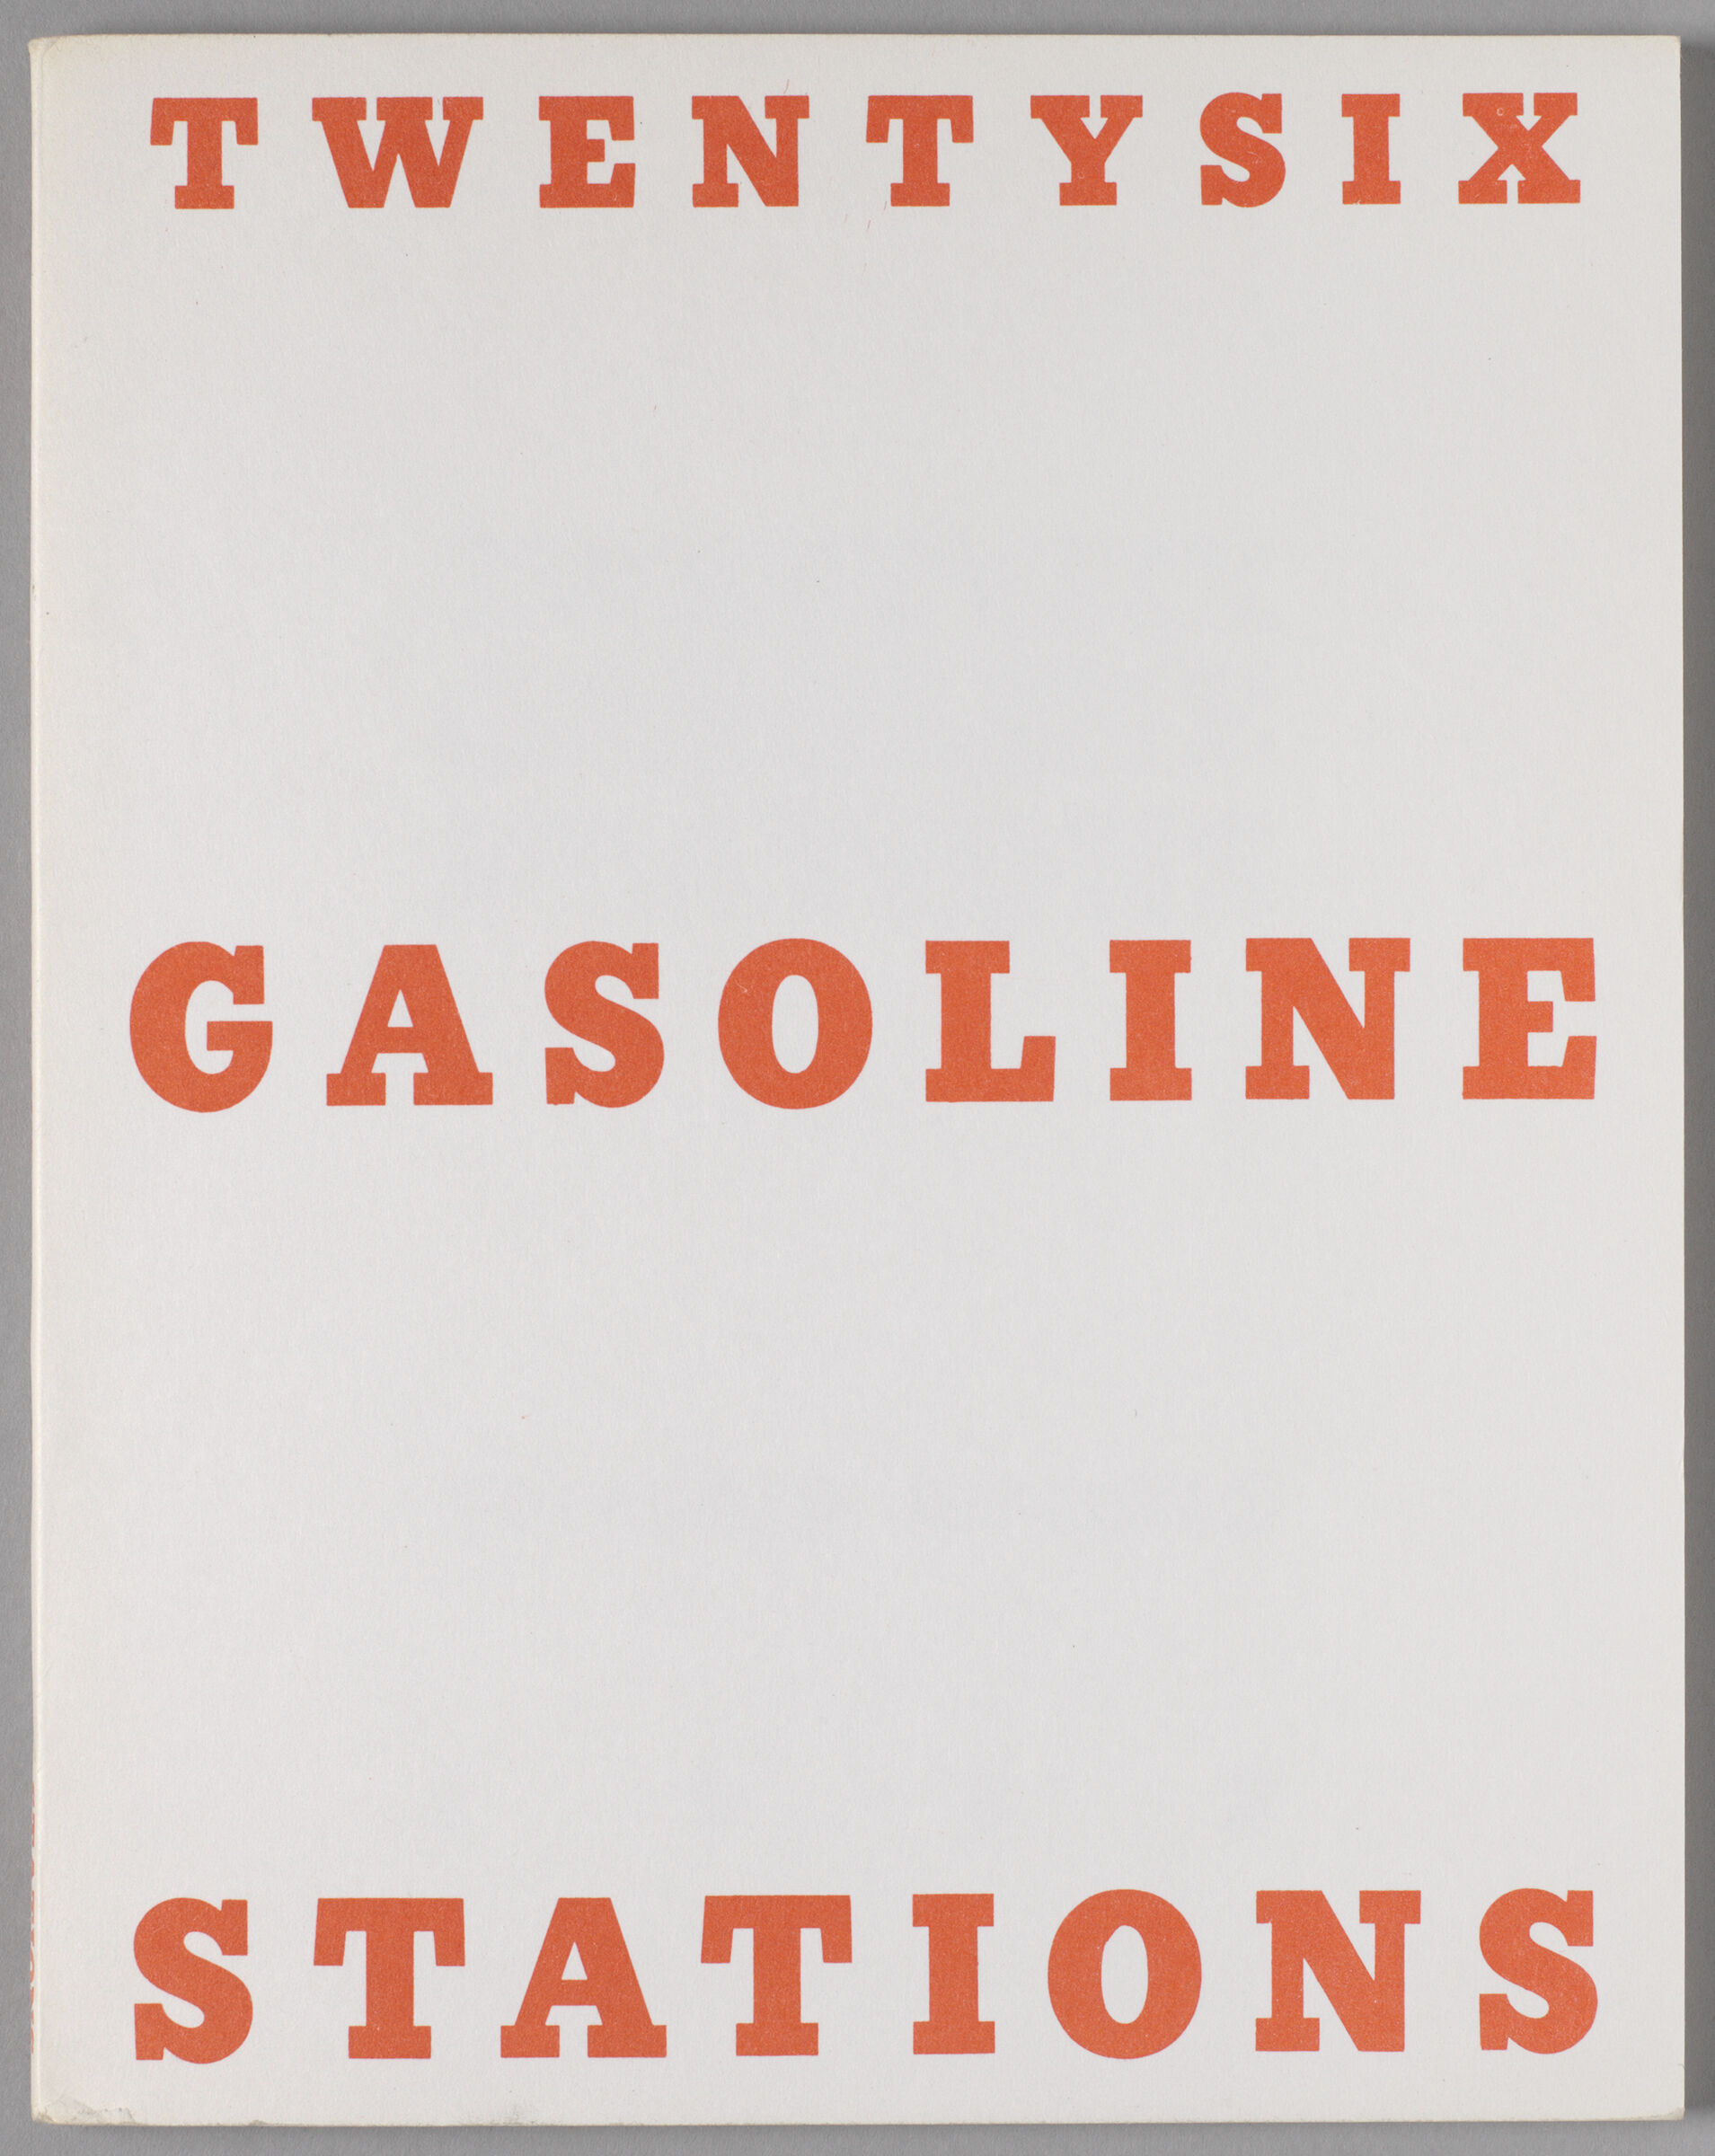 Twentysix Gasoline Stations